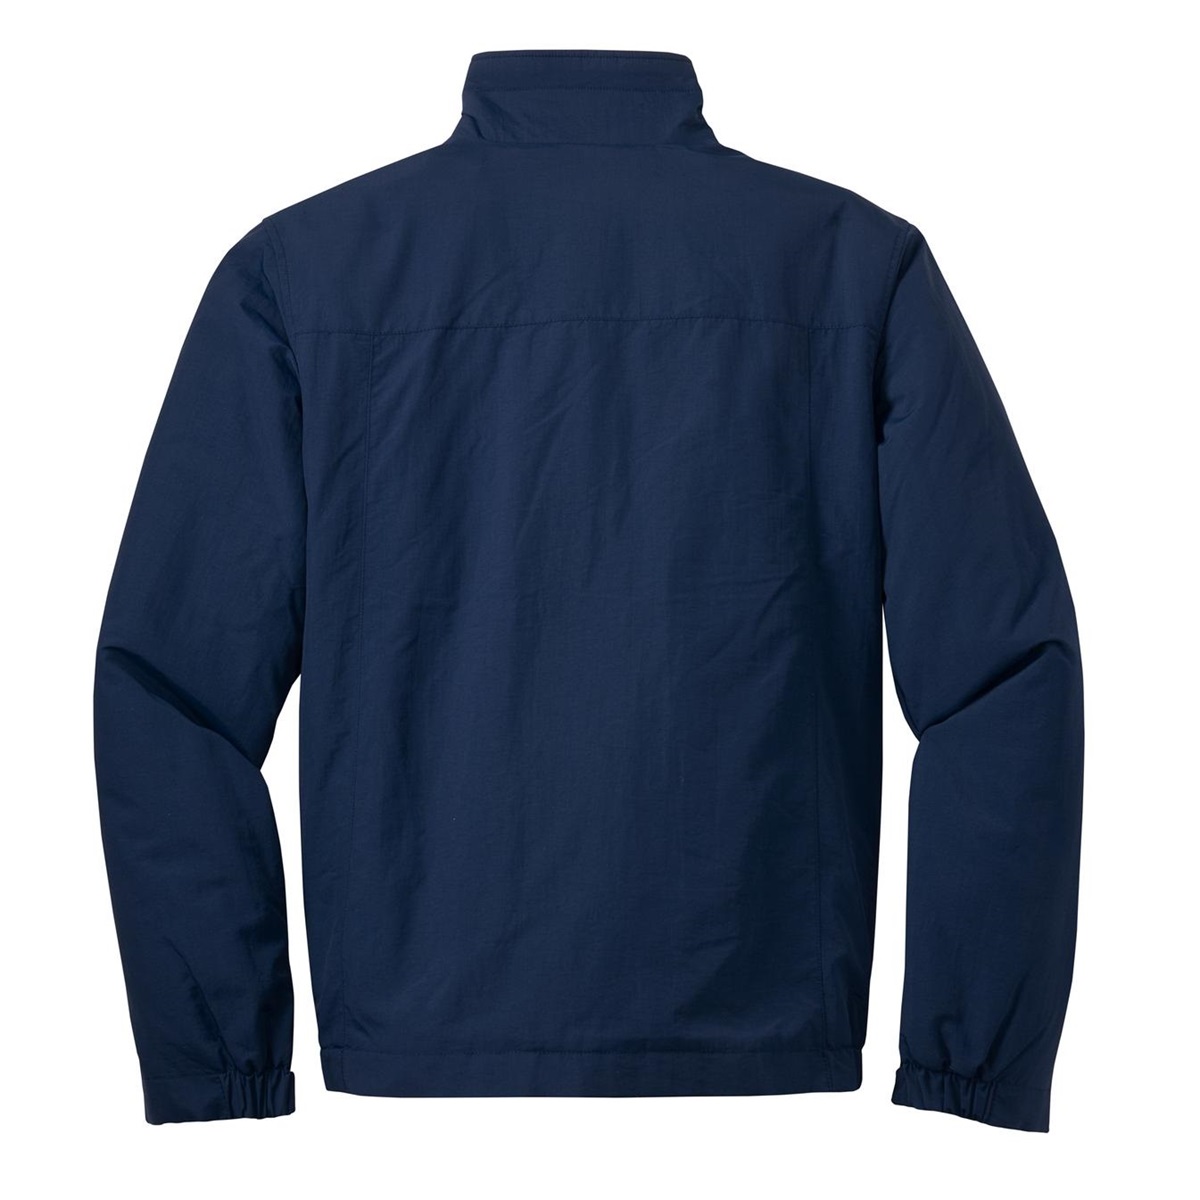 Eddie Bauer EB520 Fleece-Lined Jacket - River Blue | FullSource.com